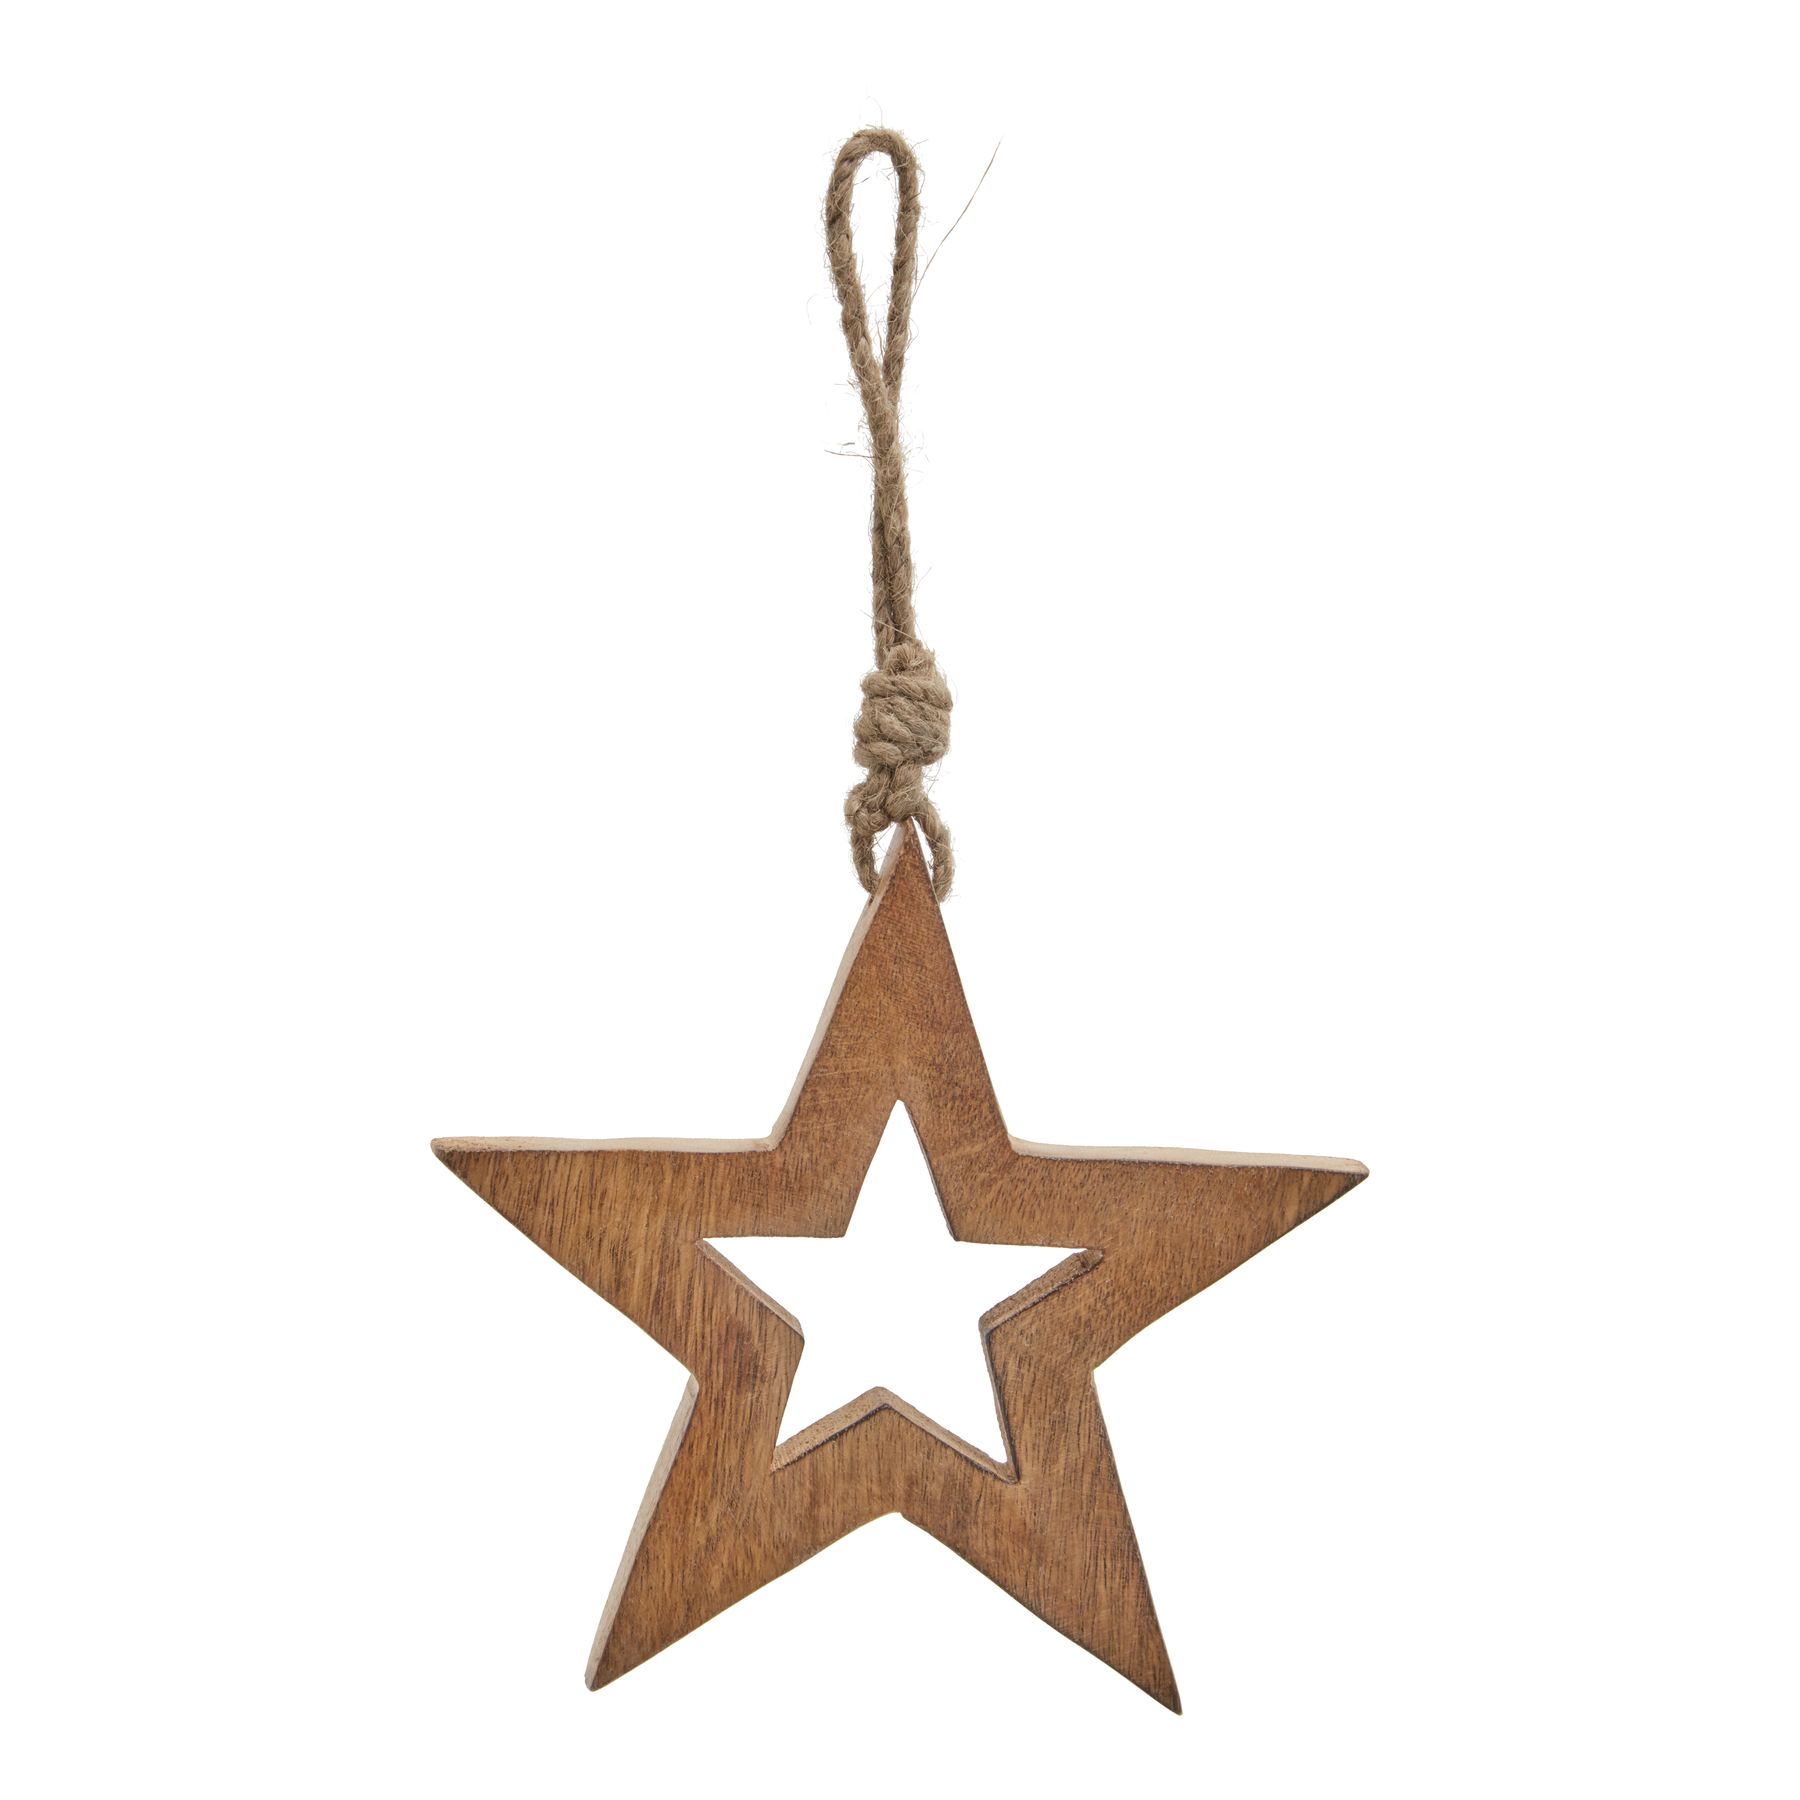 Natural Wooden Hanging Star - Image 2